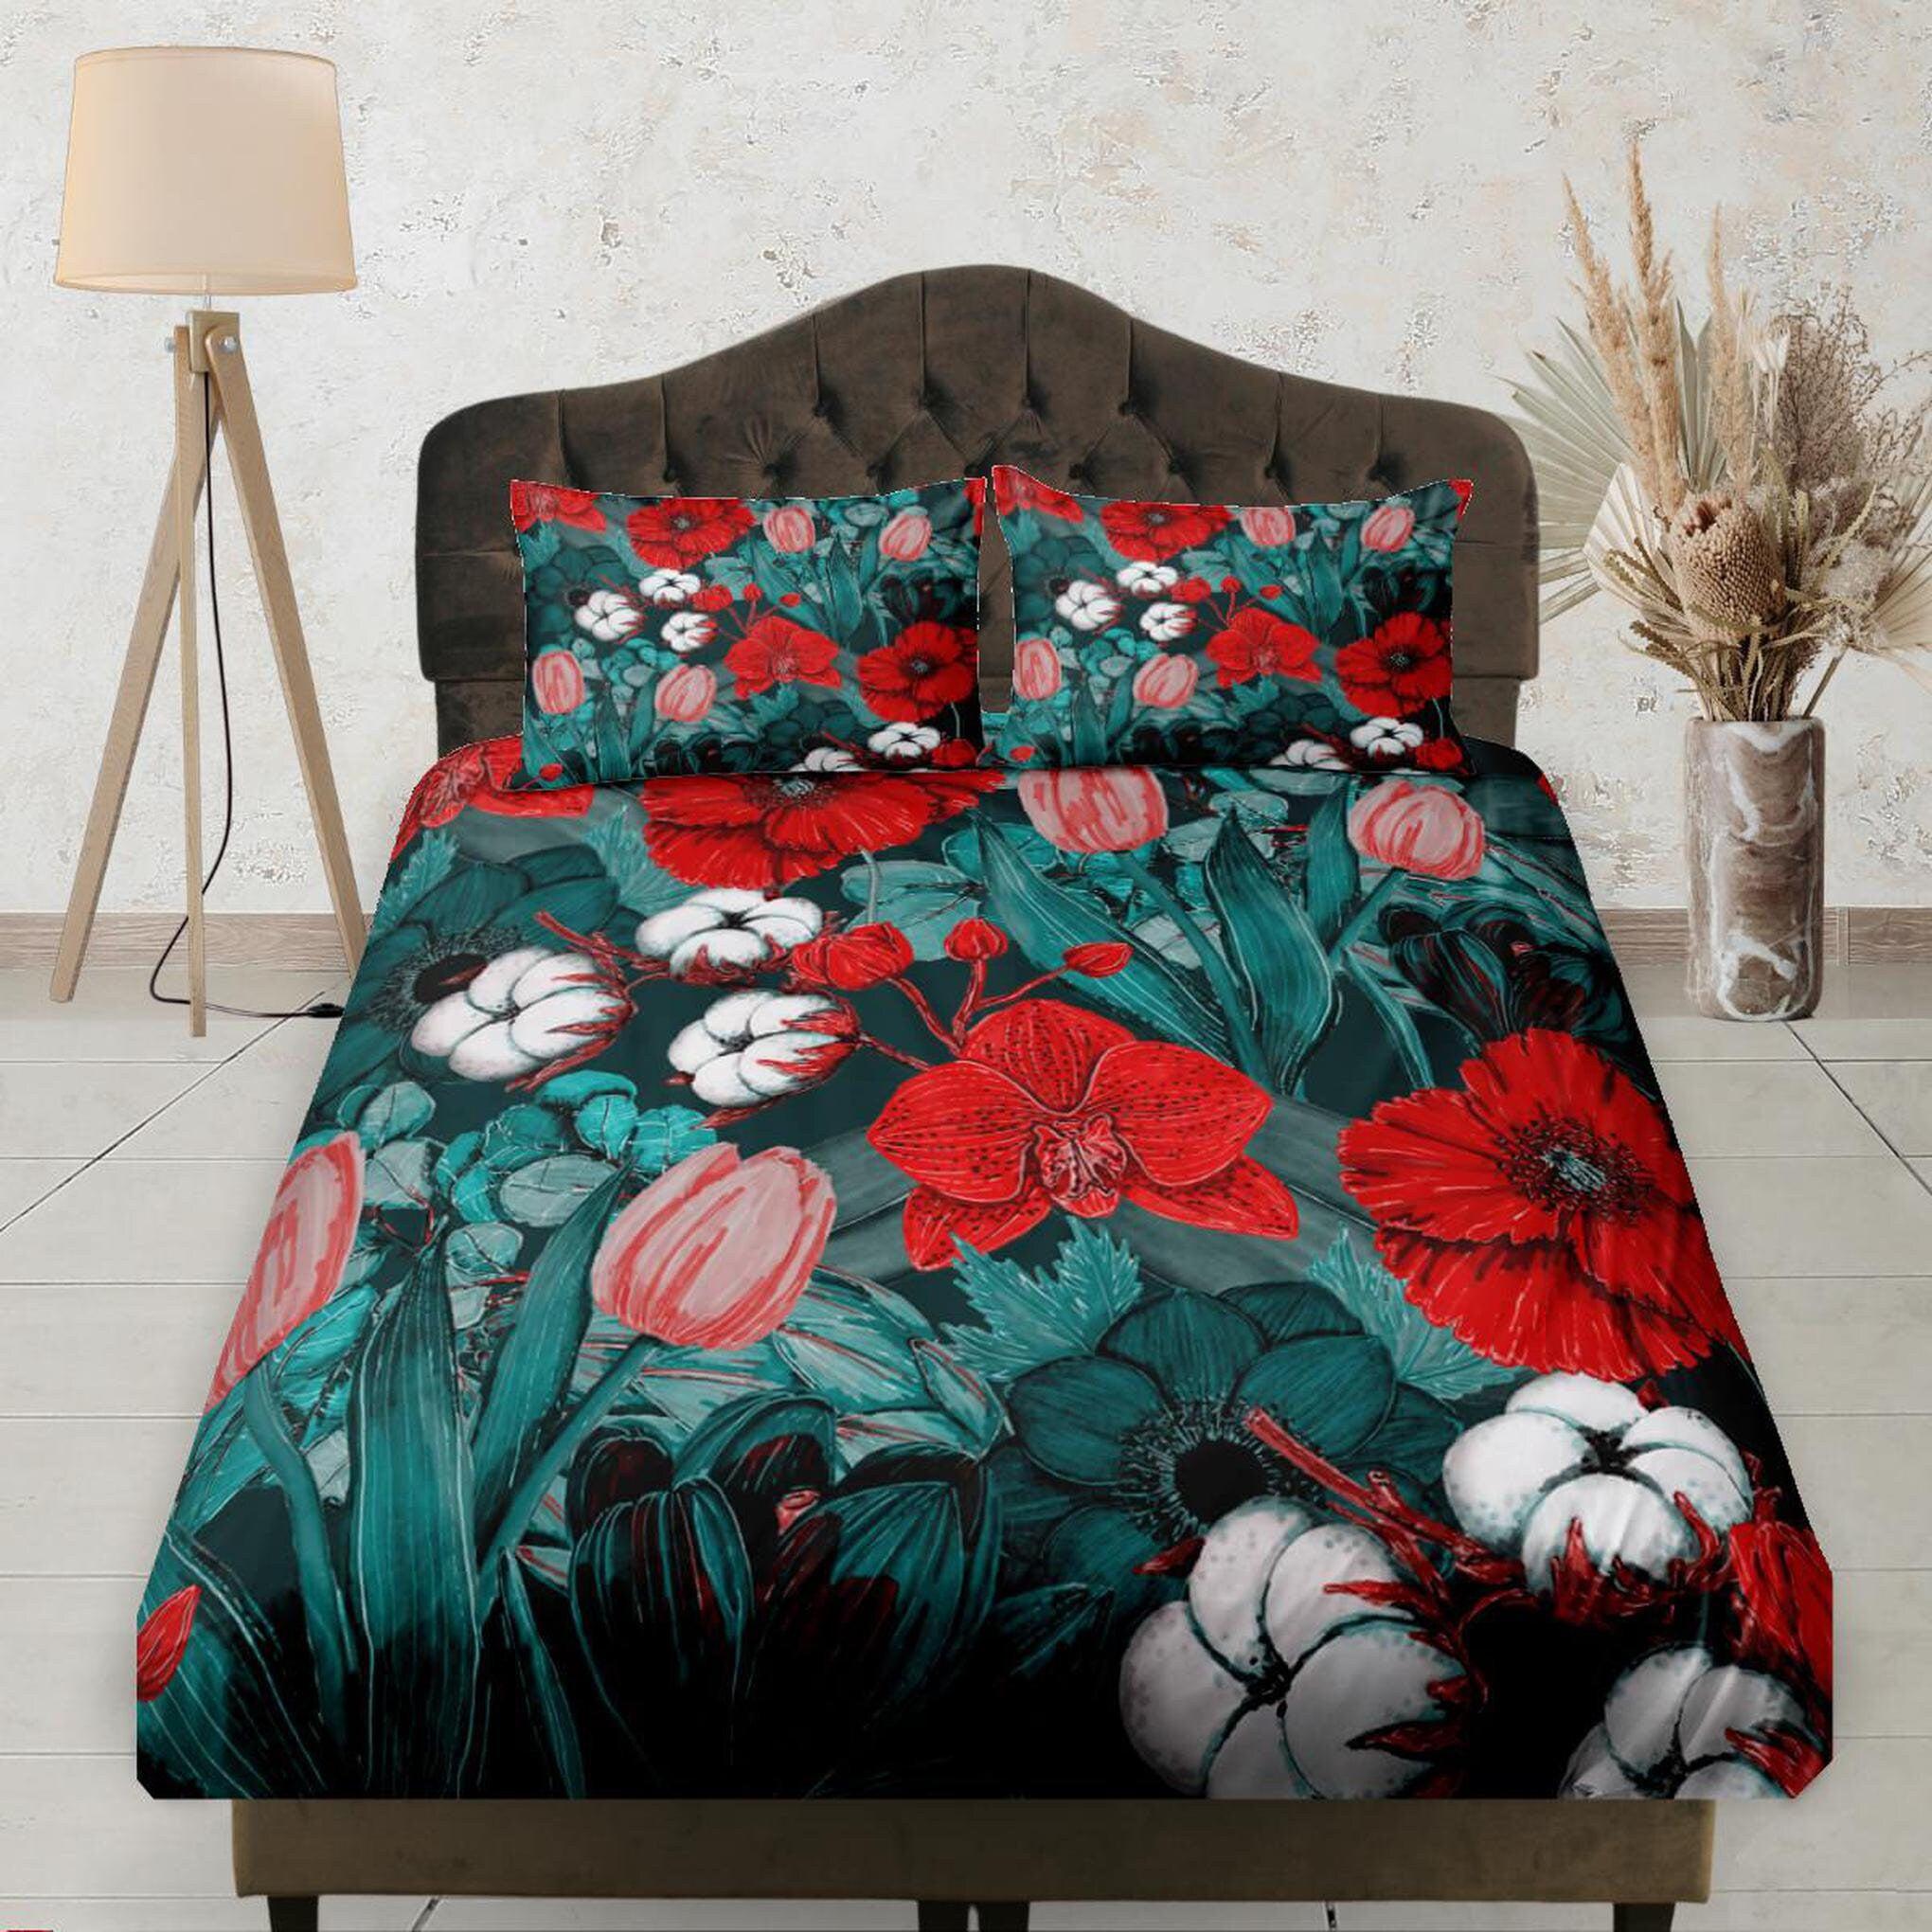 daintyduvet Red Poppy and Wild Flowers Fitted Bedsheet Deep Pocket, Floral Aesthetic Boho Bedding Set Full, Dorm Bedding, Crib Sheet, King, Queen